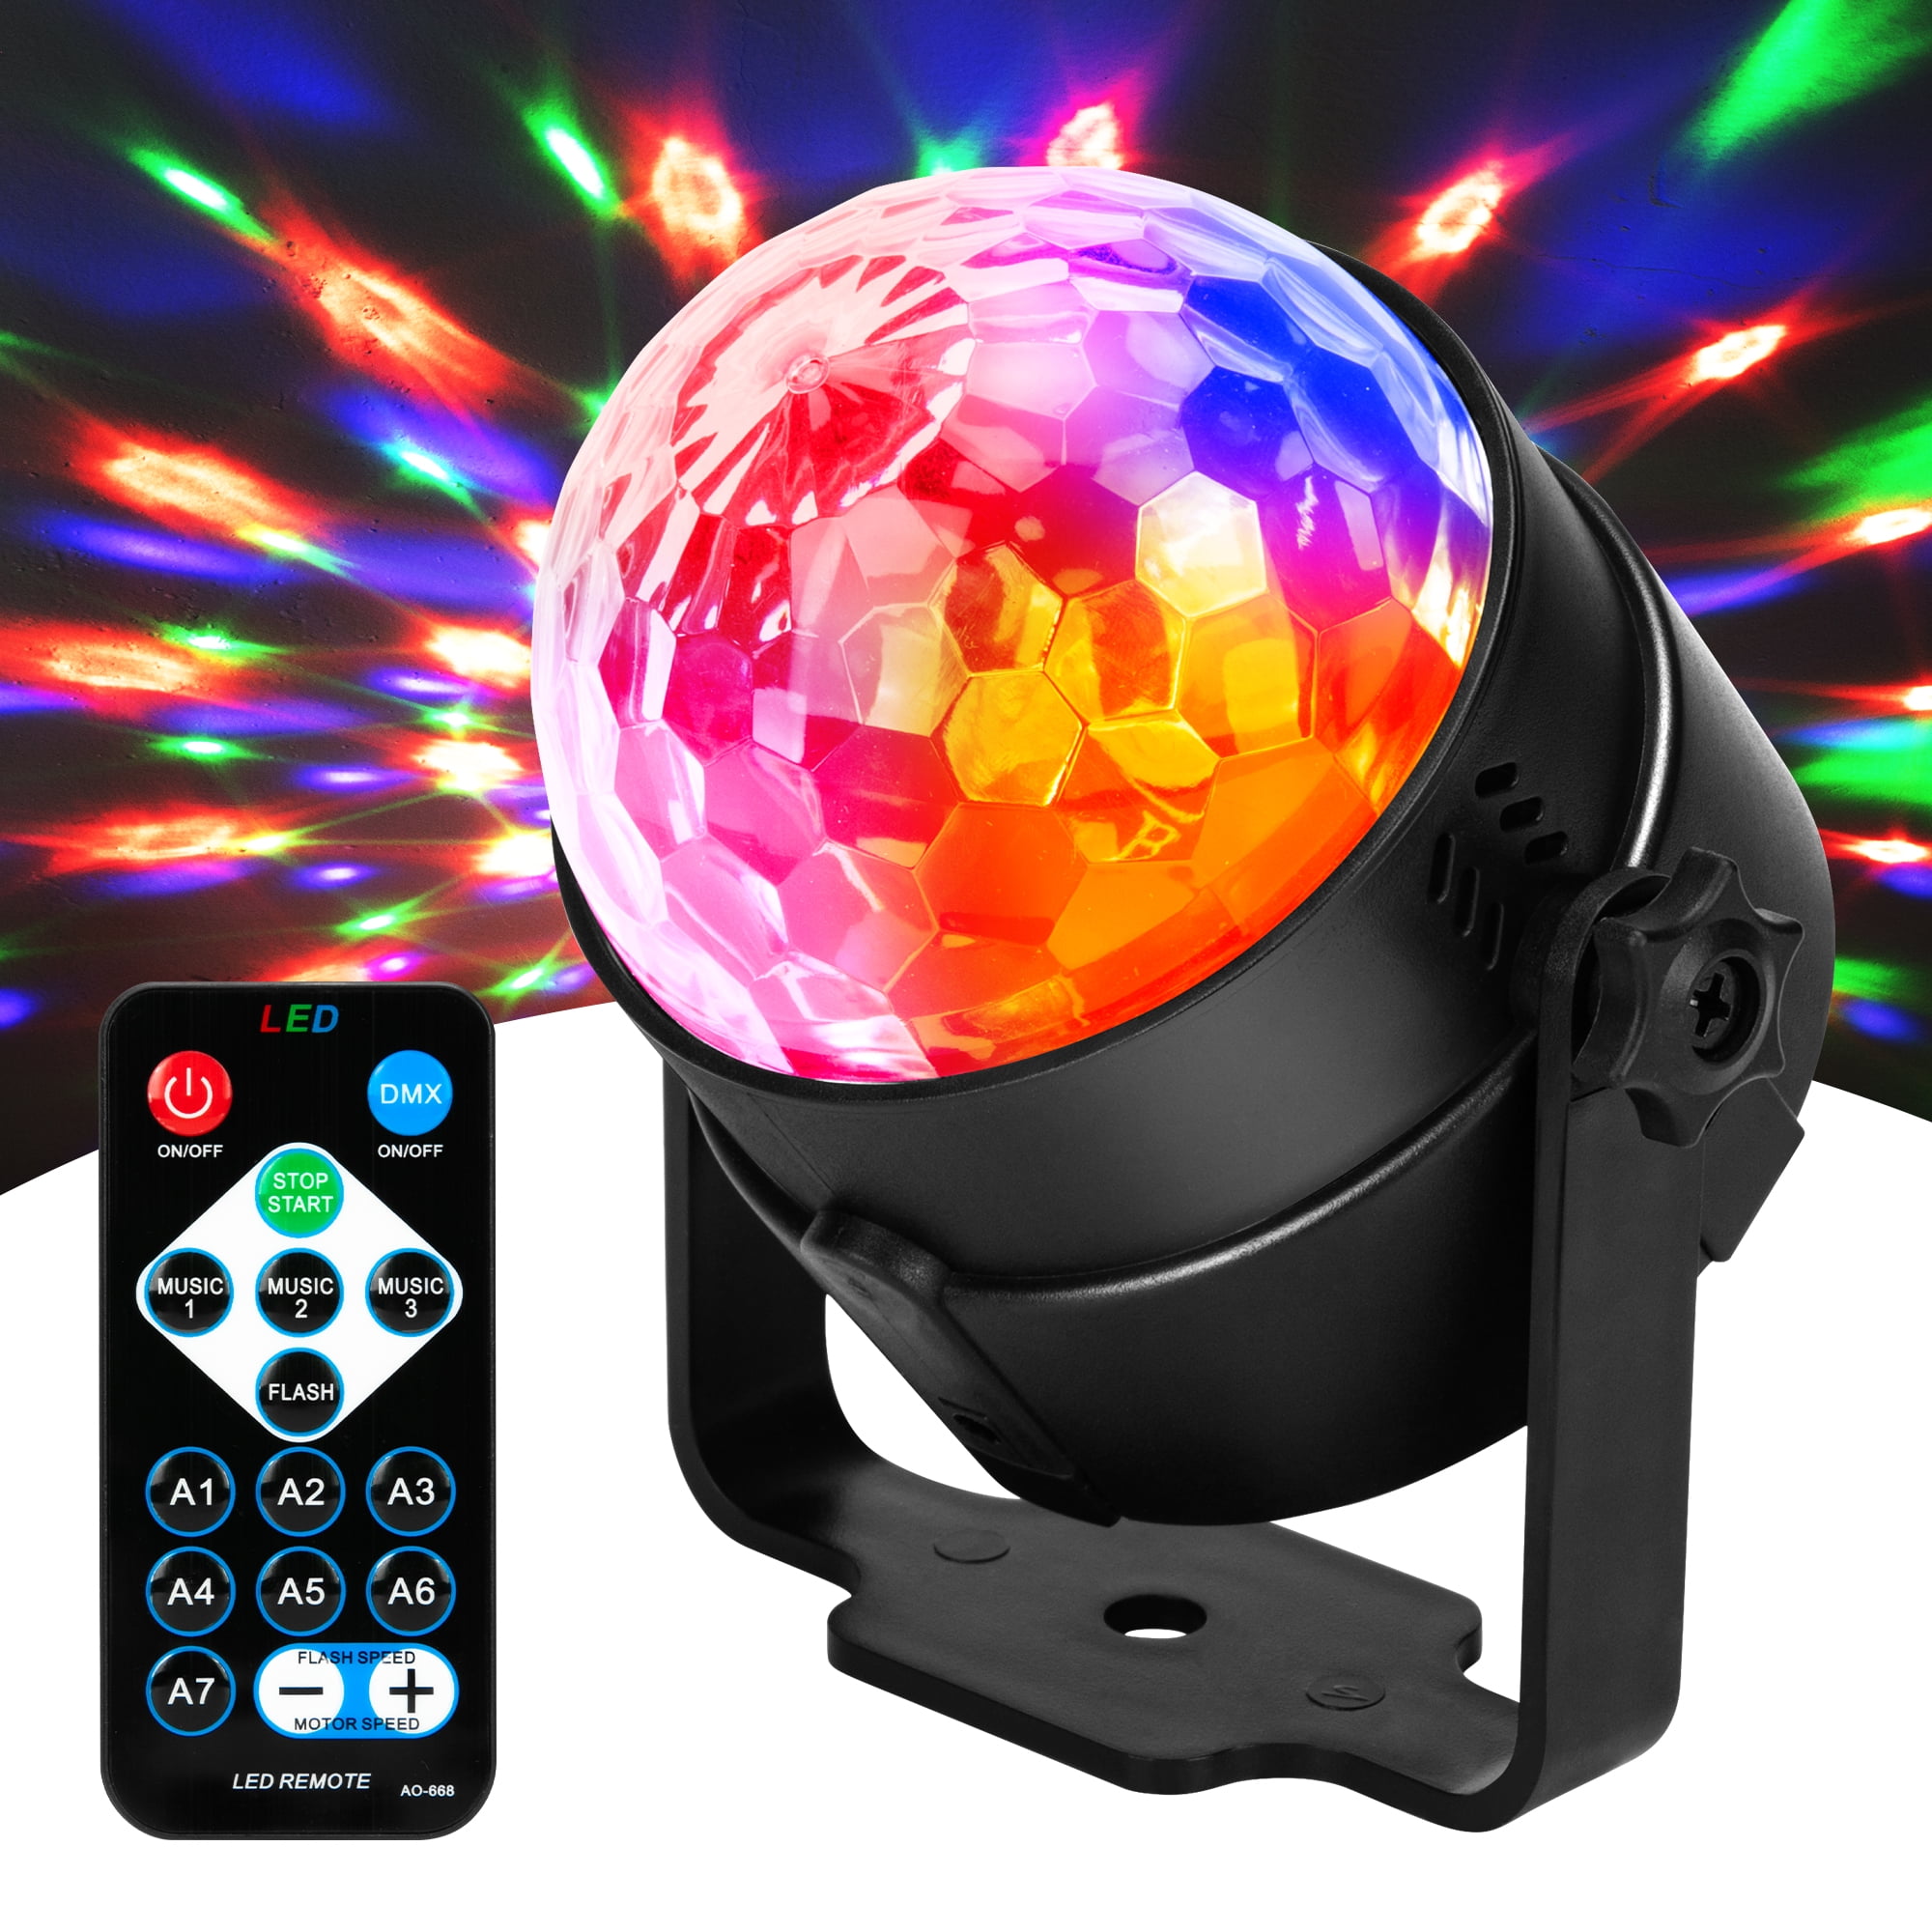 5x Disco Party Lights Stage Light Strobe LED DJ Ball Indoor Dance Bulb Lamp USA 